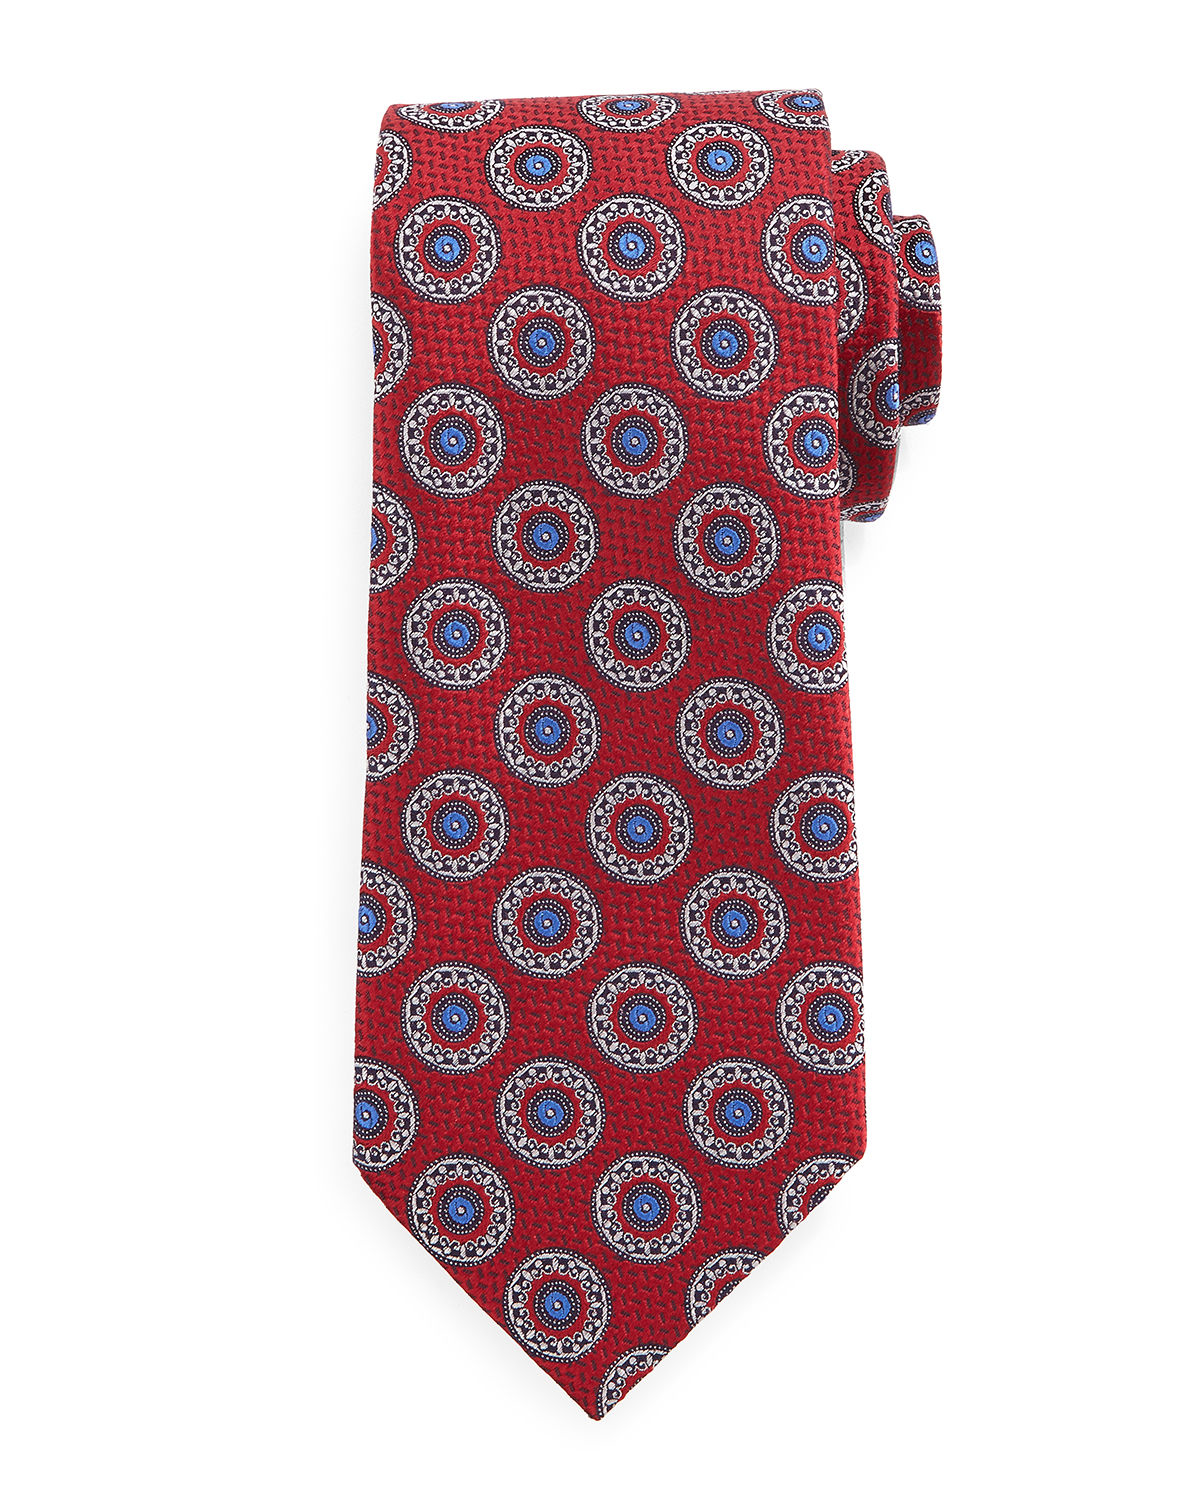 Ermenegildo Zegna Circle-medallion Print Silk Tie in Red for Men - Lyst